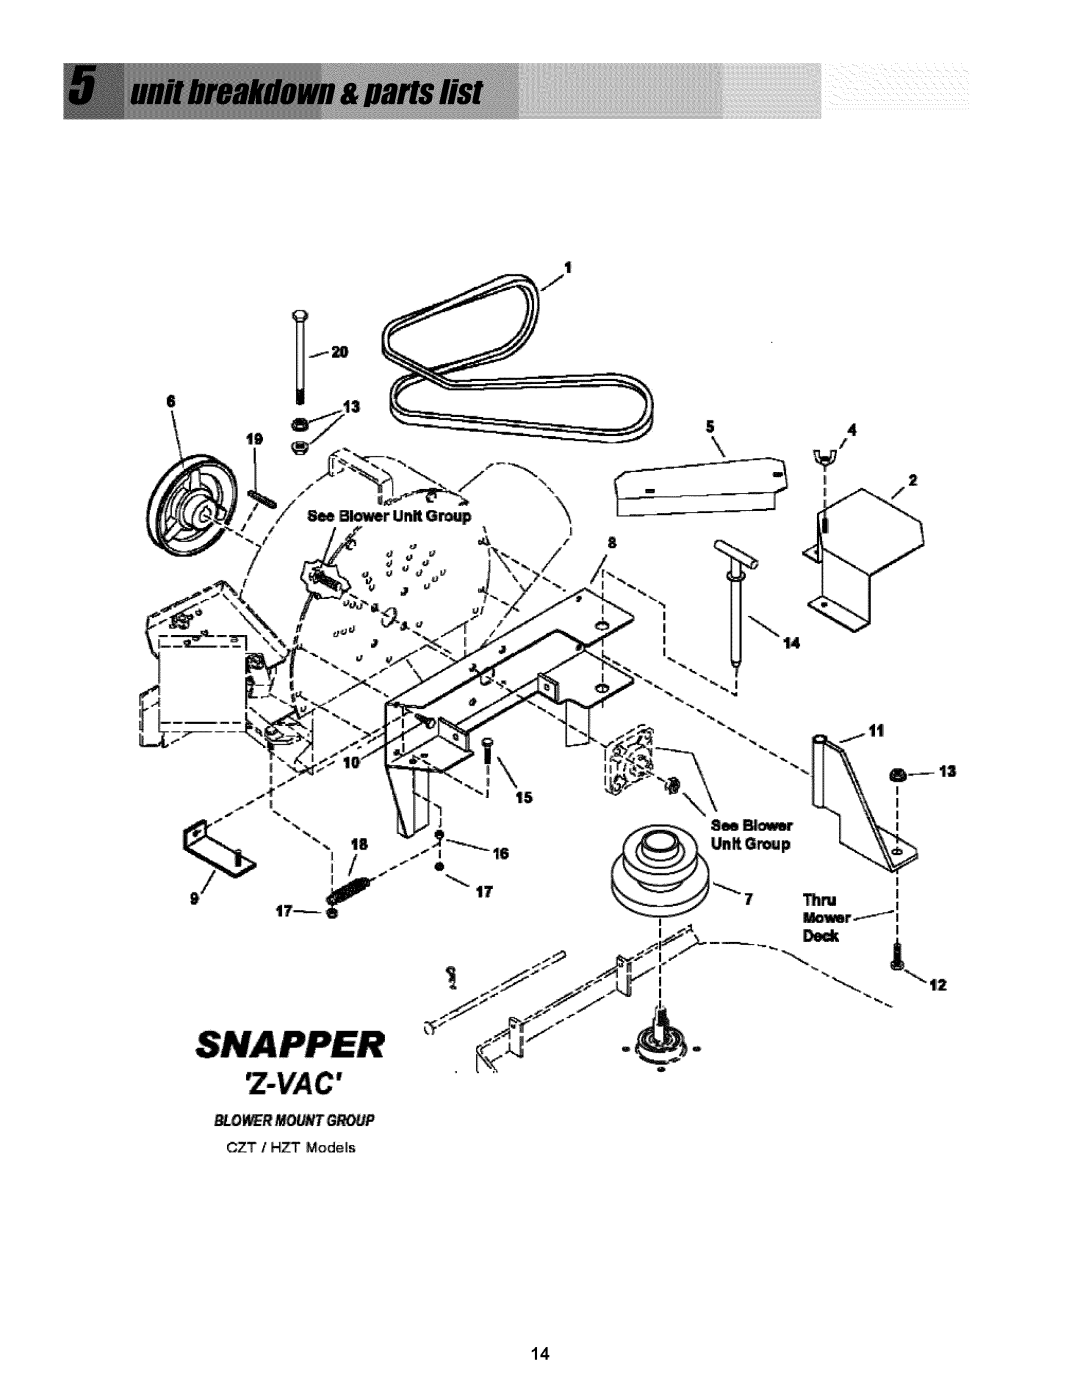 Snapper P/N 7078273, 0-50576 manual Blower G, Jp, CZT 1 T Mo,de s 